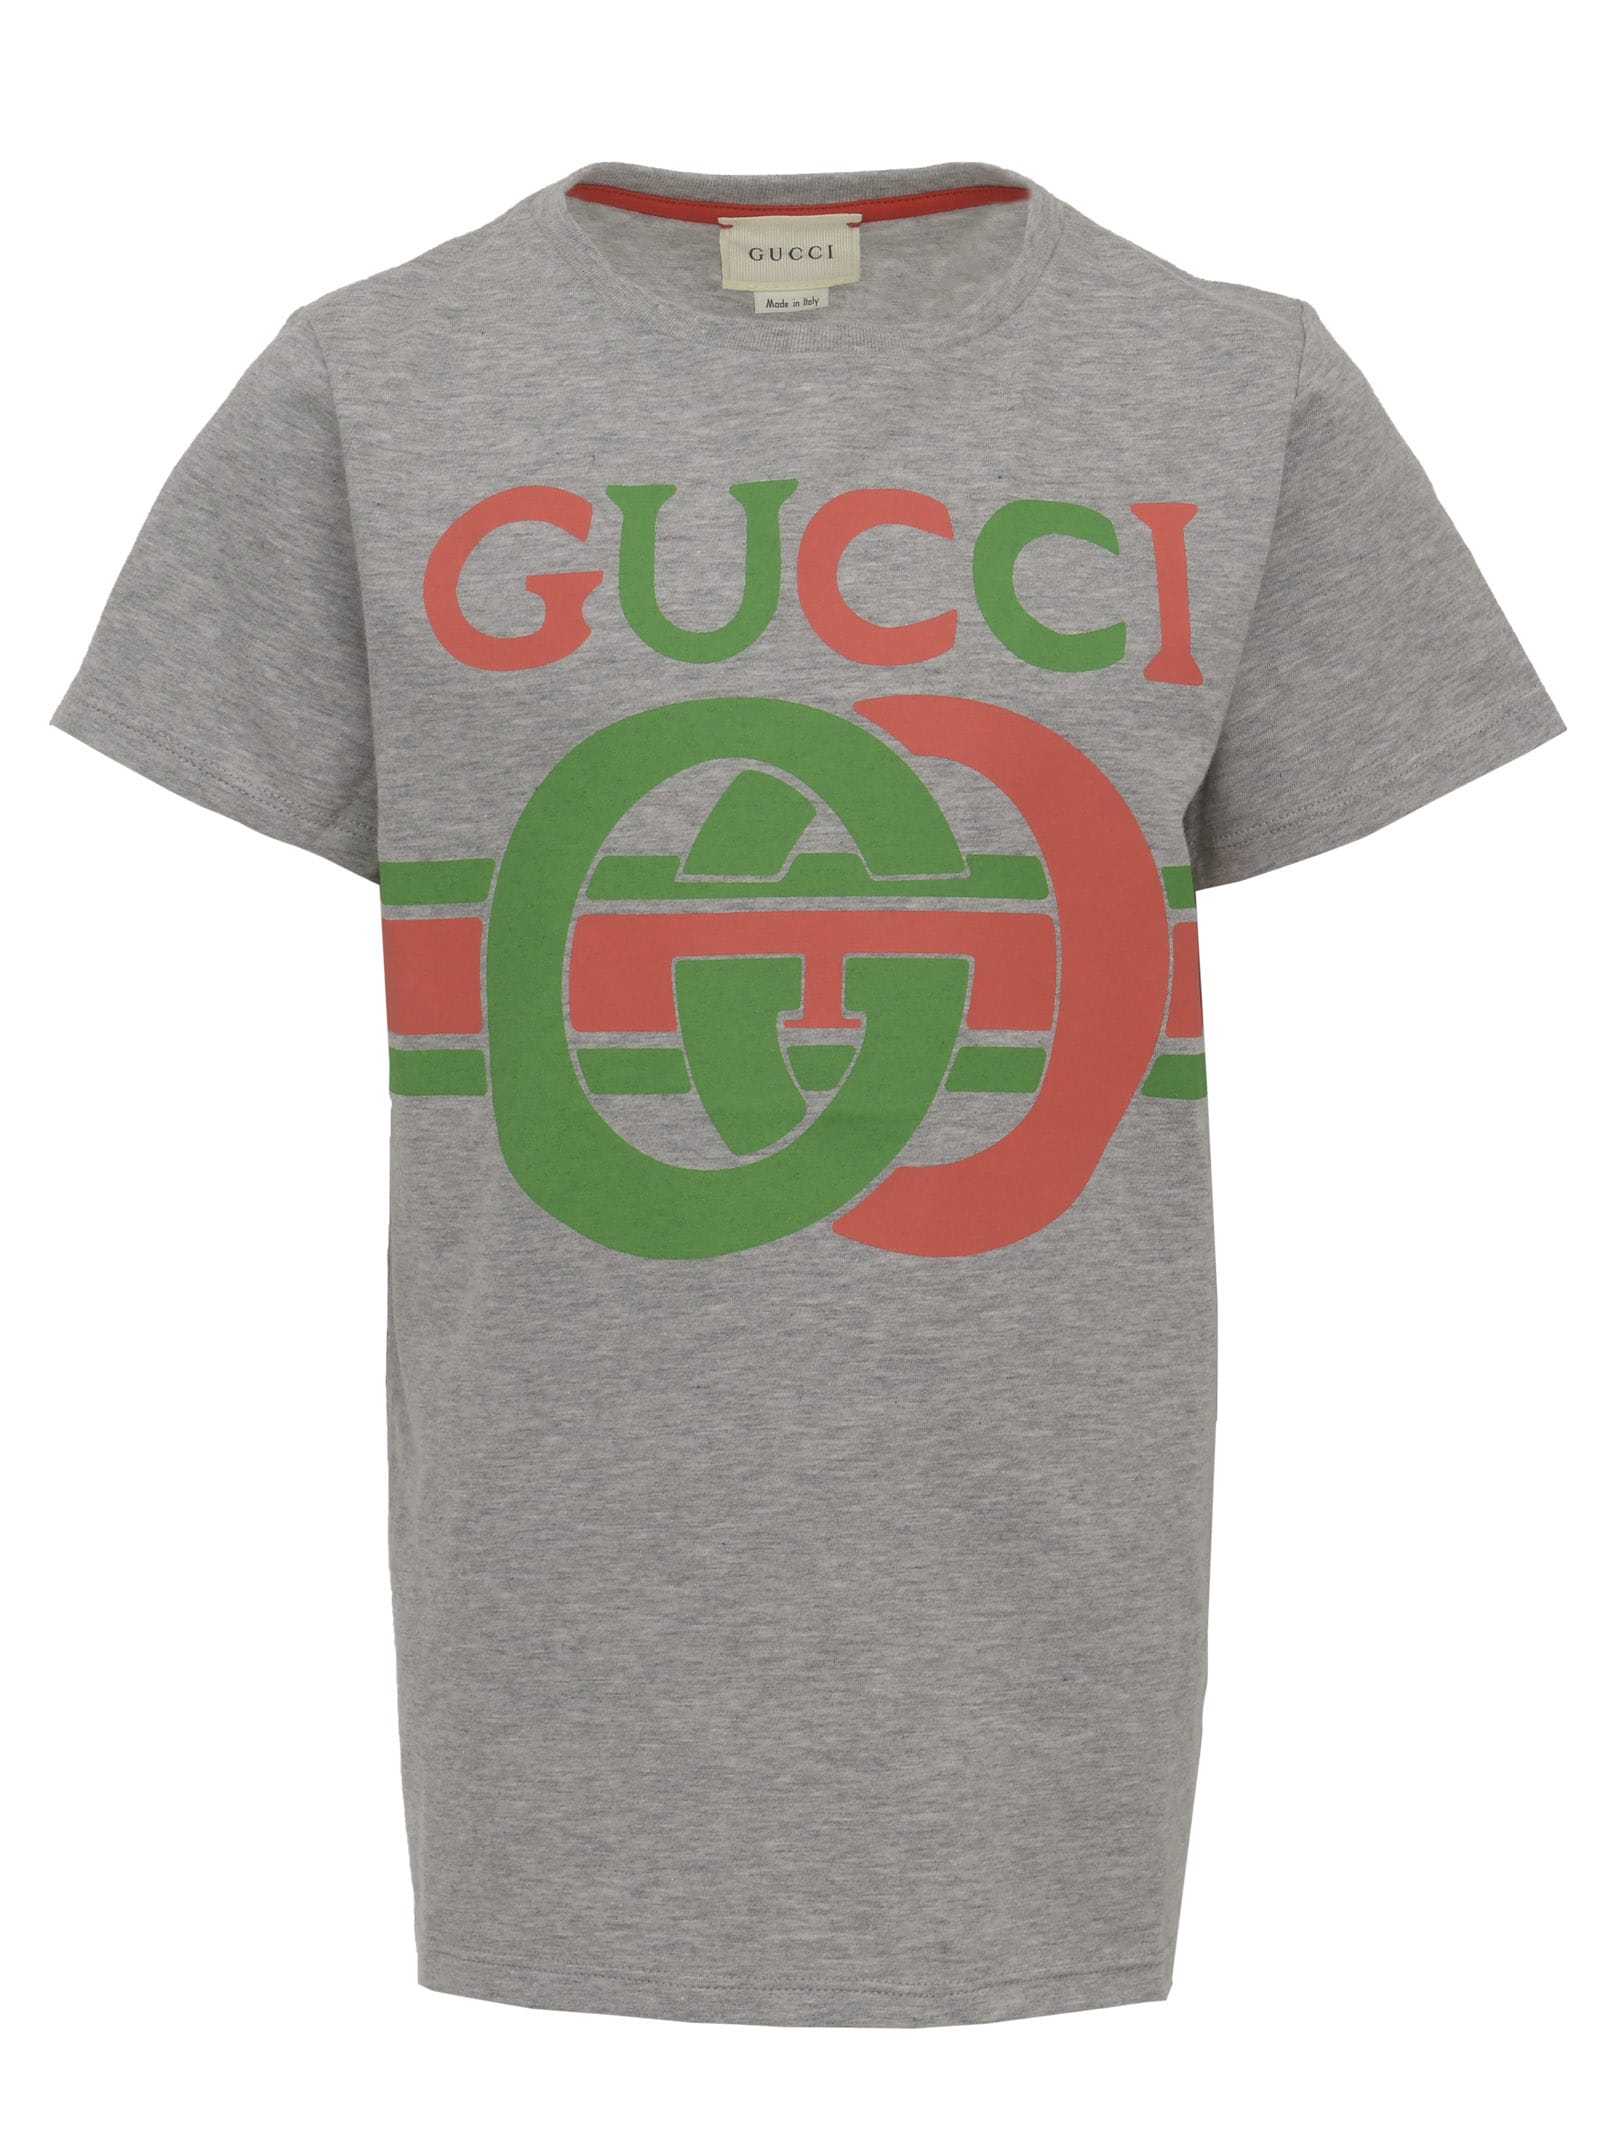 Gucci T-Shirts & Polo Shirts | italist, ALWAYS LIKE A SALE